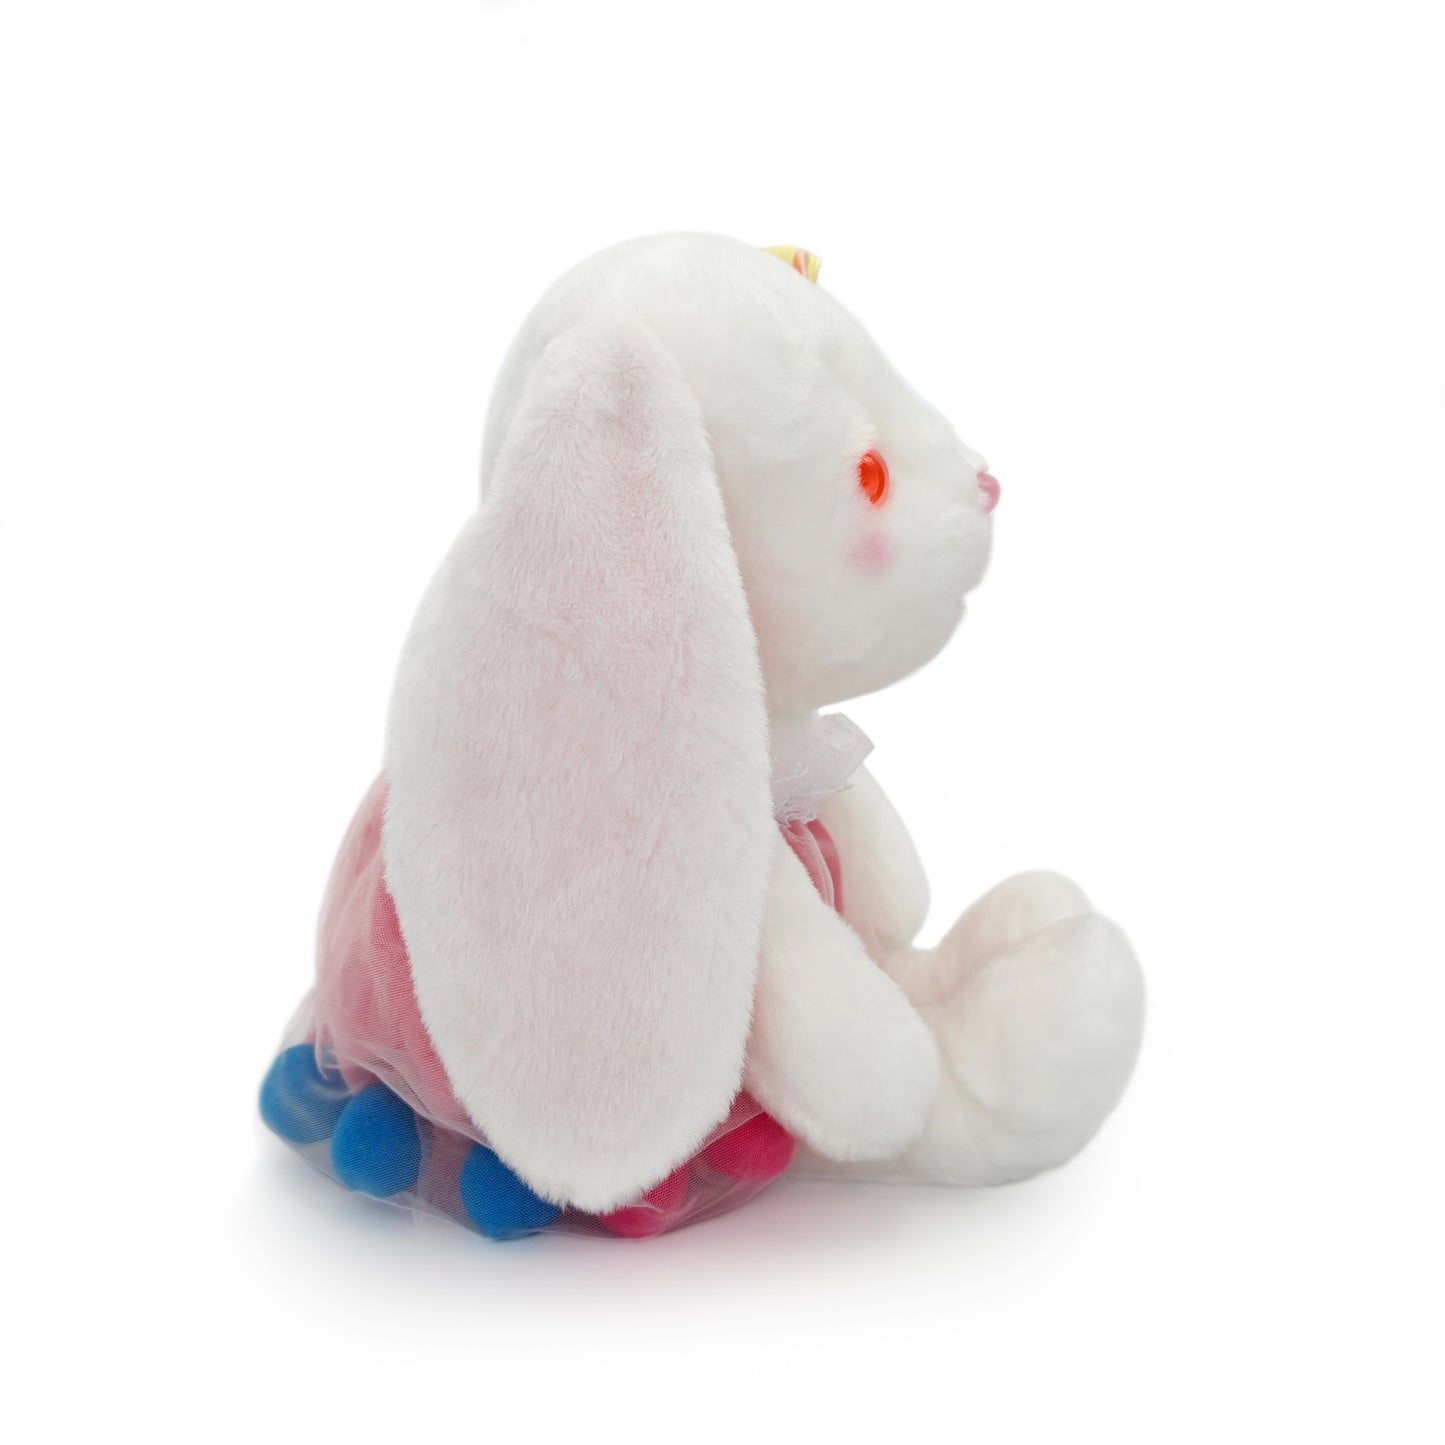 Side of white rabbit plush toy